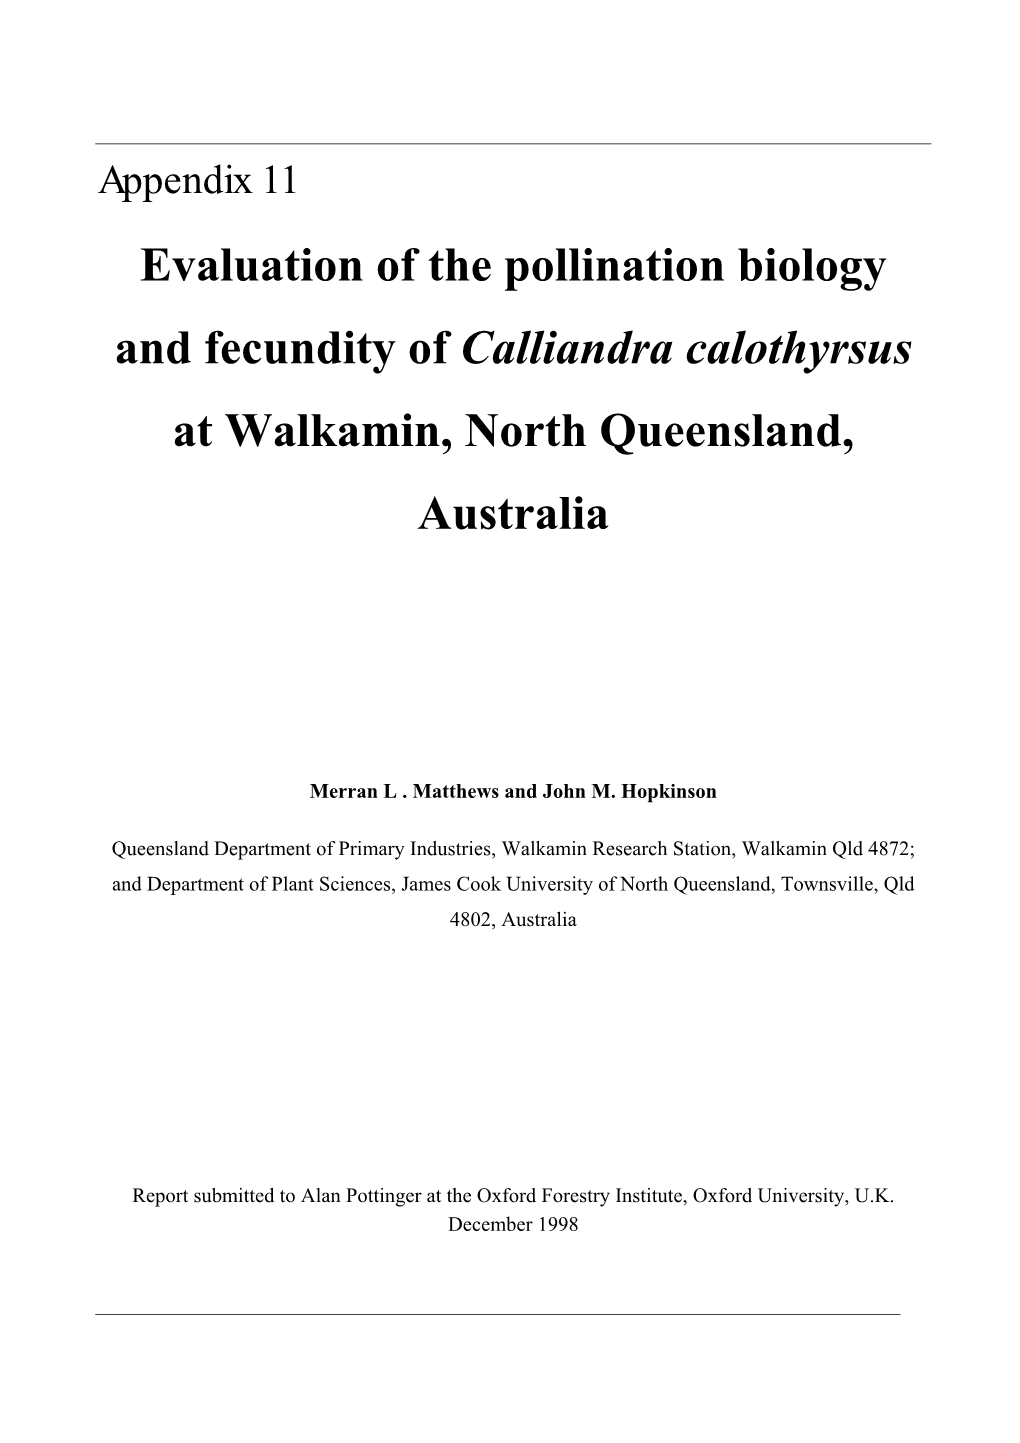 Evaluation of the Pollination Biology and Fecundity of Calliandra Calothyrsus at Walkamin, North Queensland, Australia